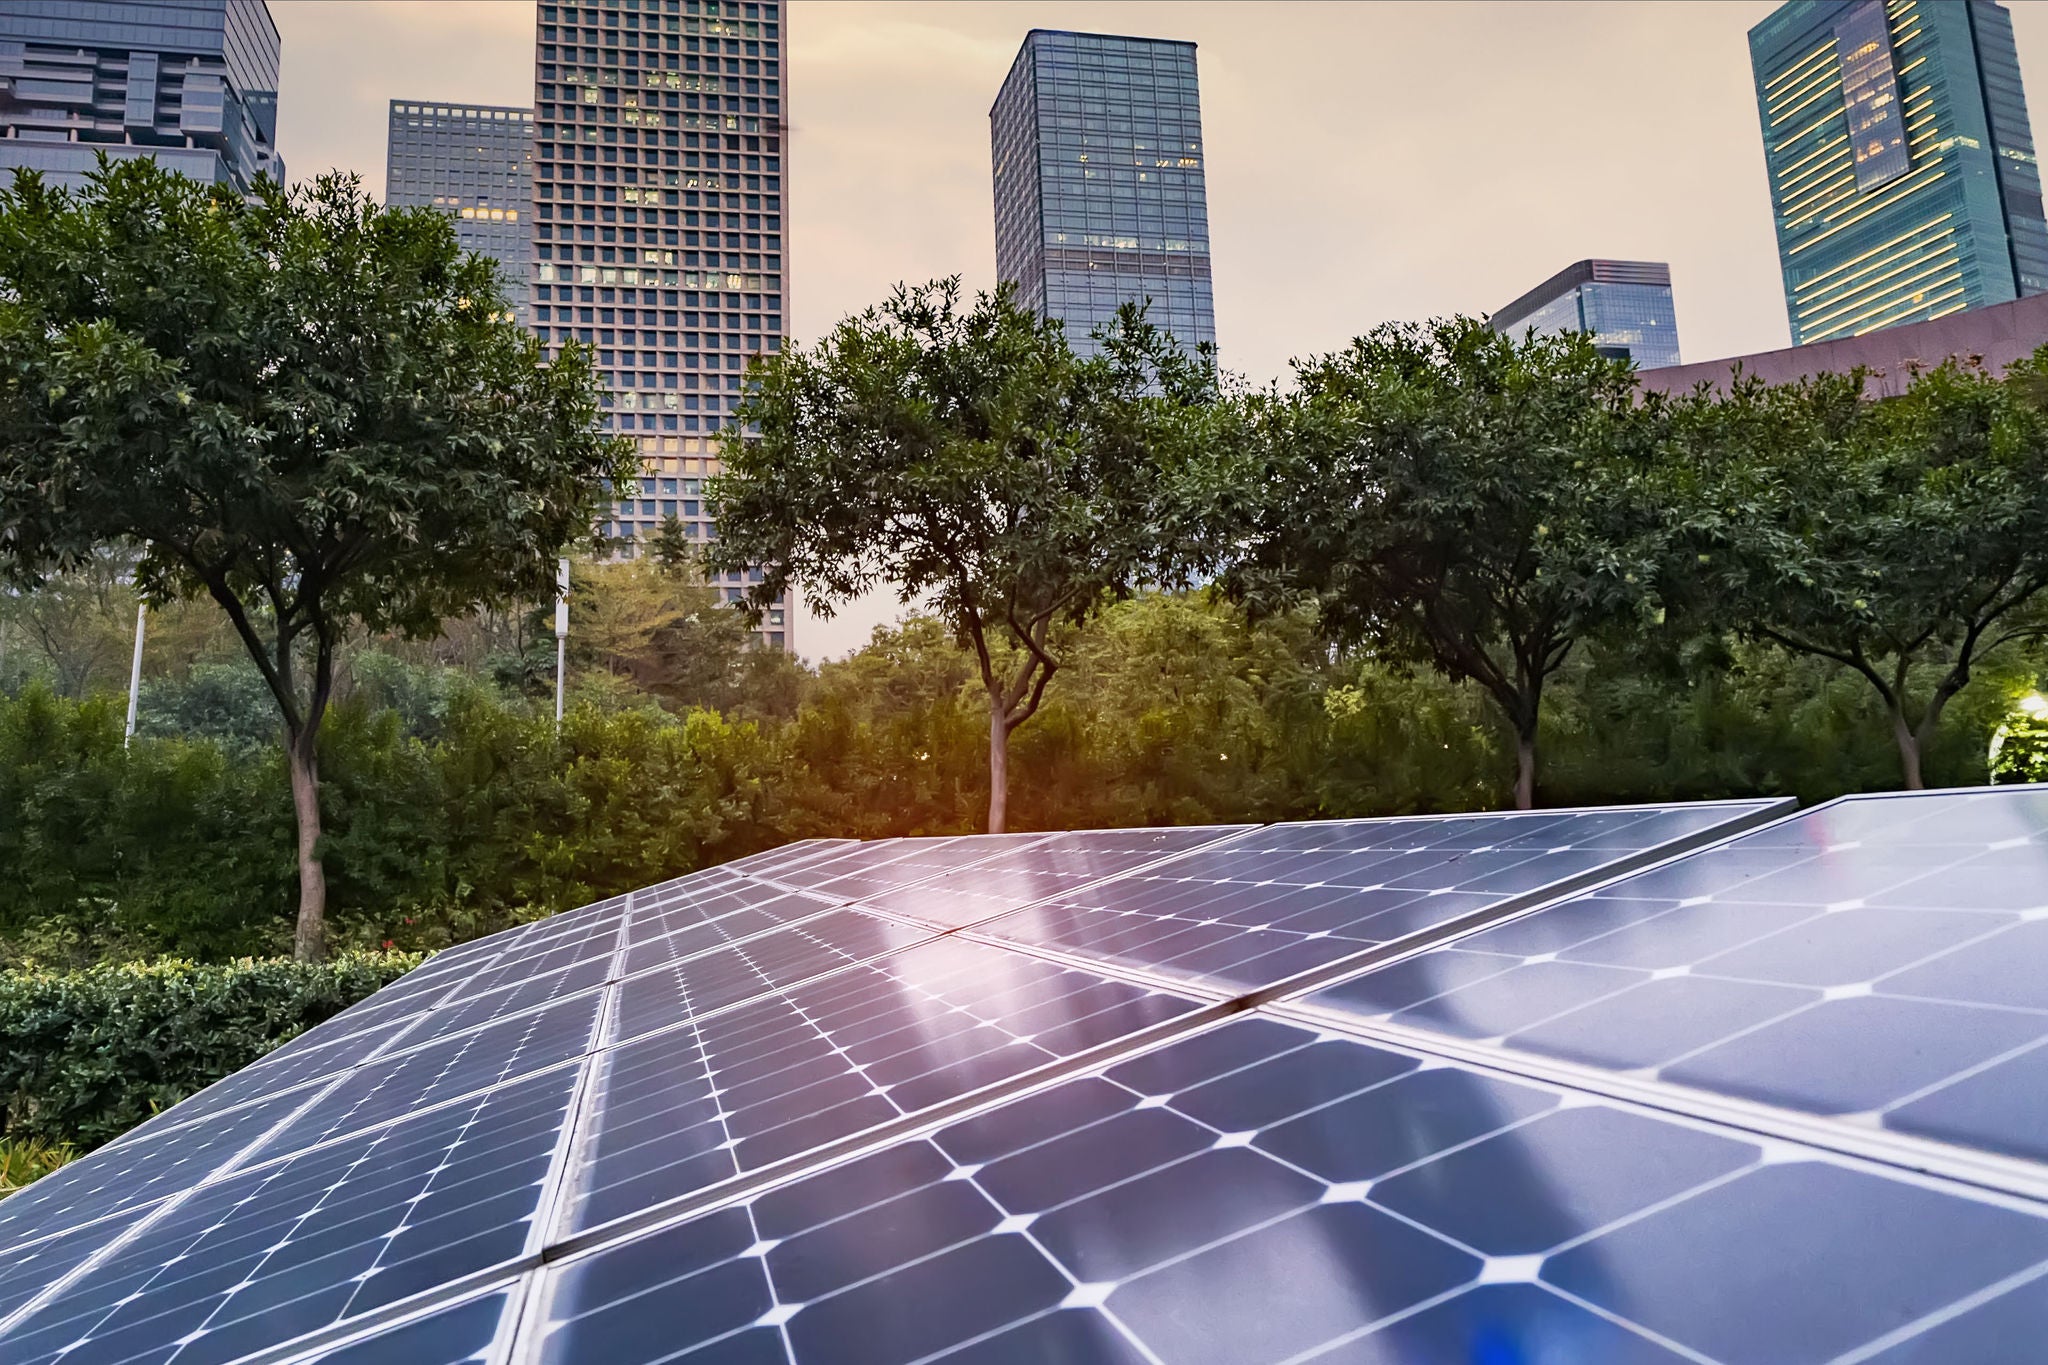 EY - Solar panels in urban park setting